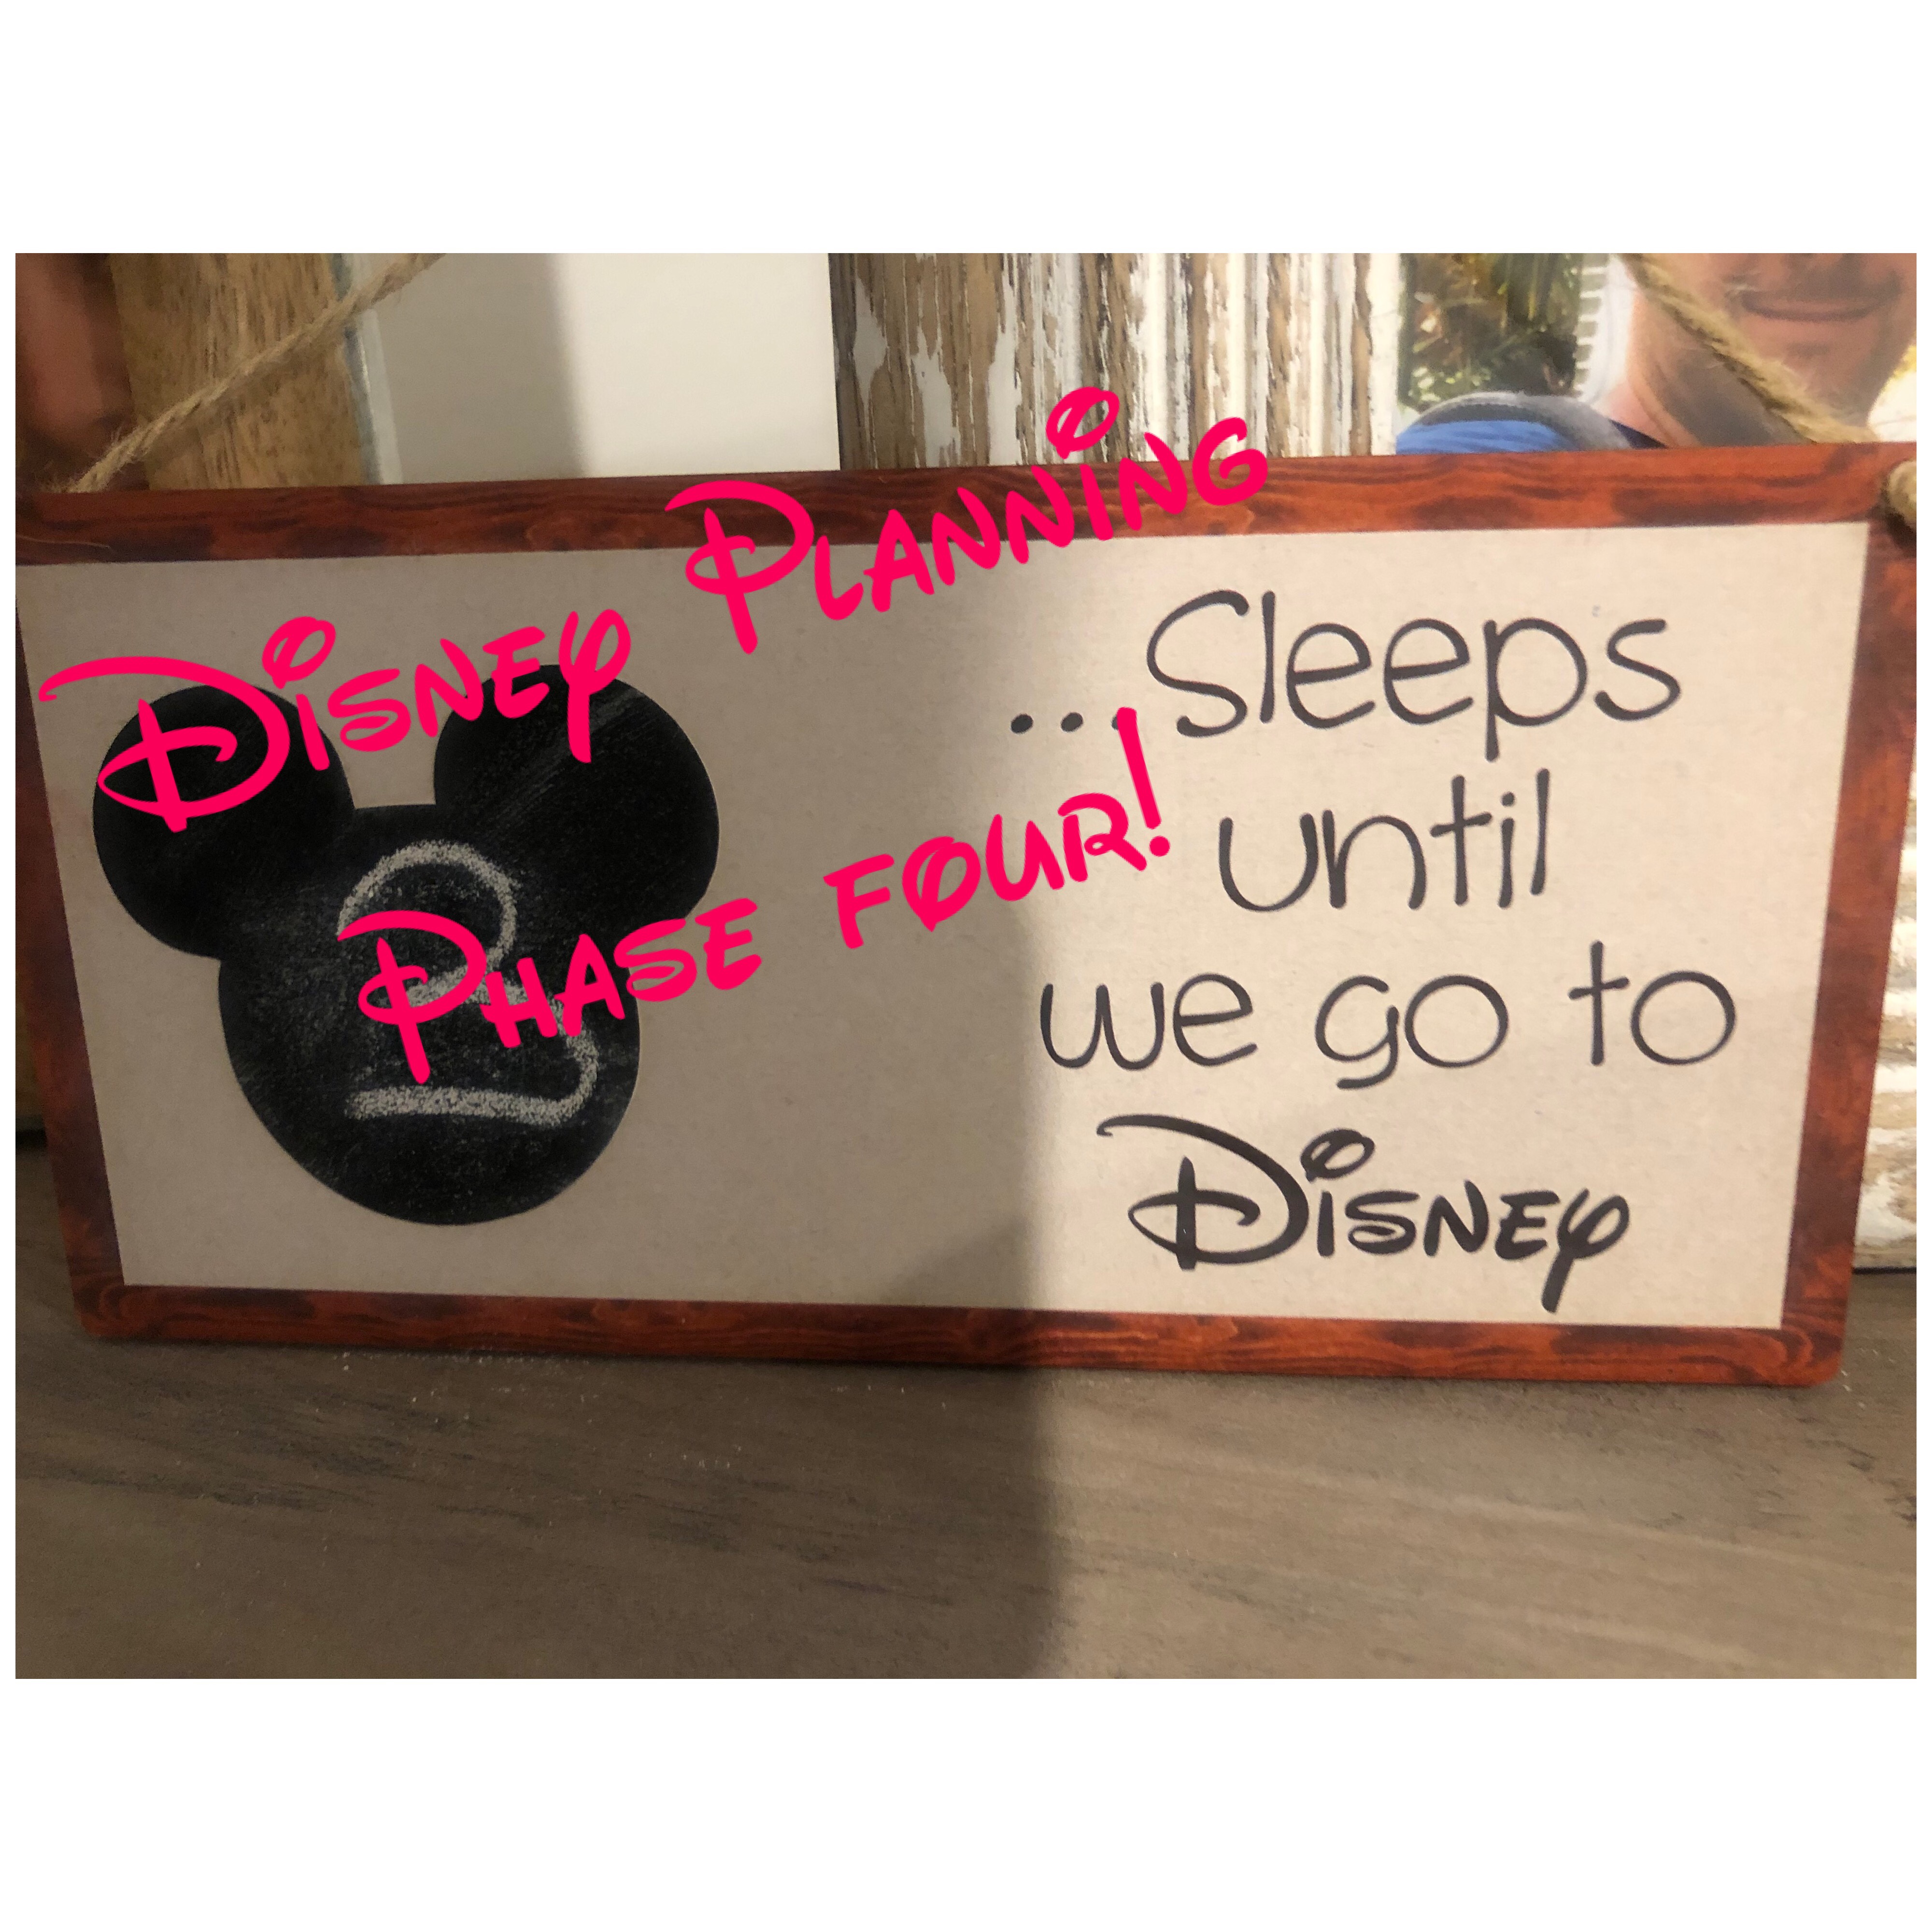 Disney planning phase four